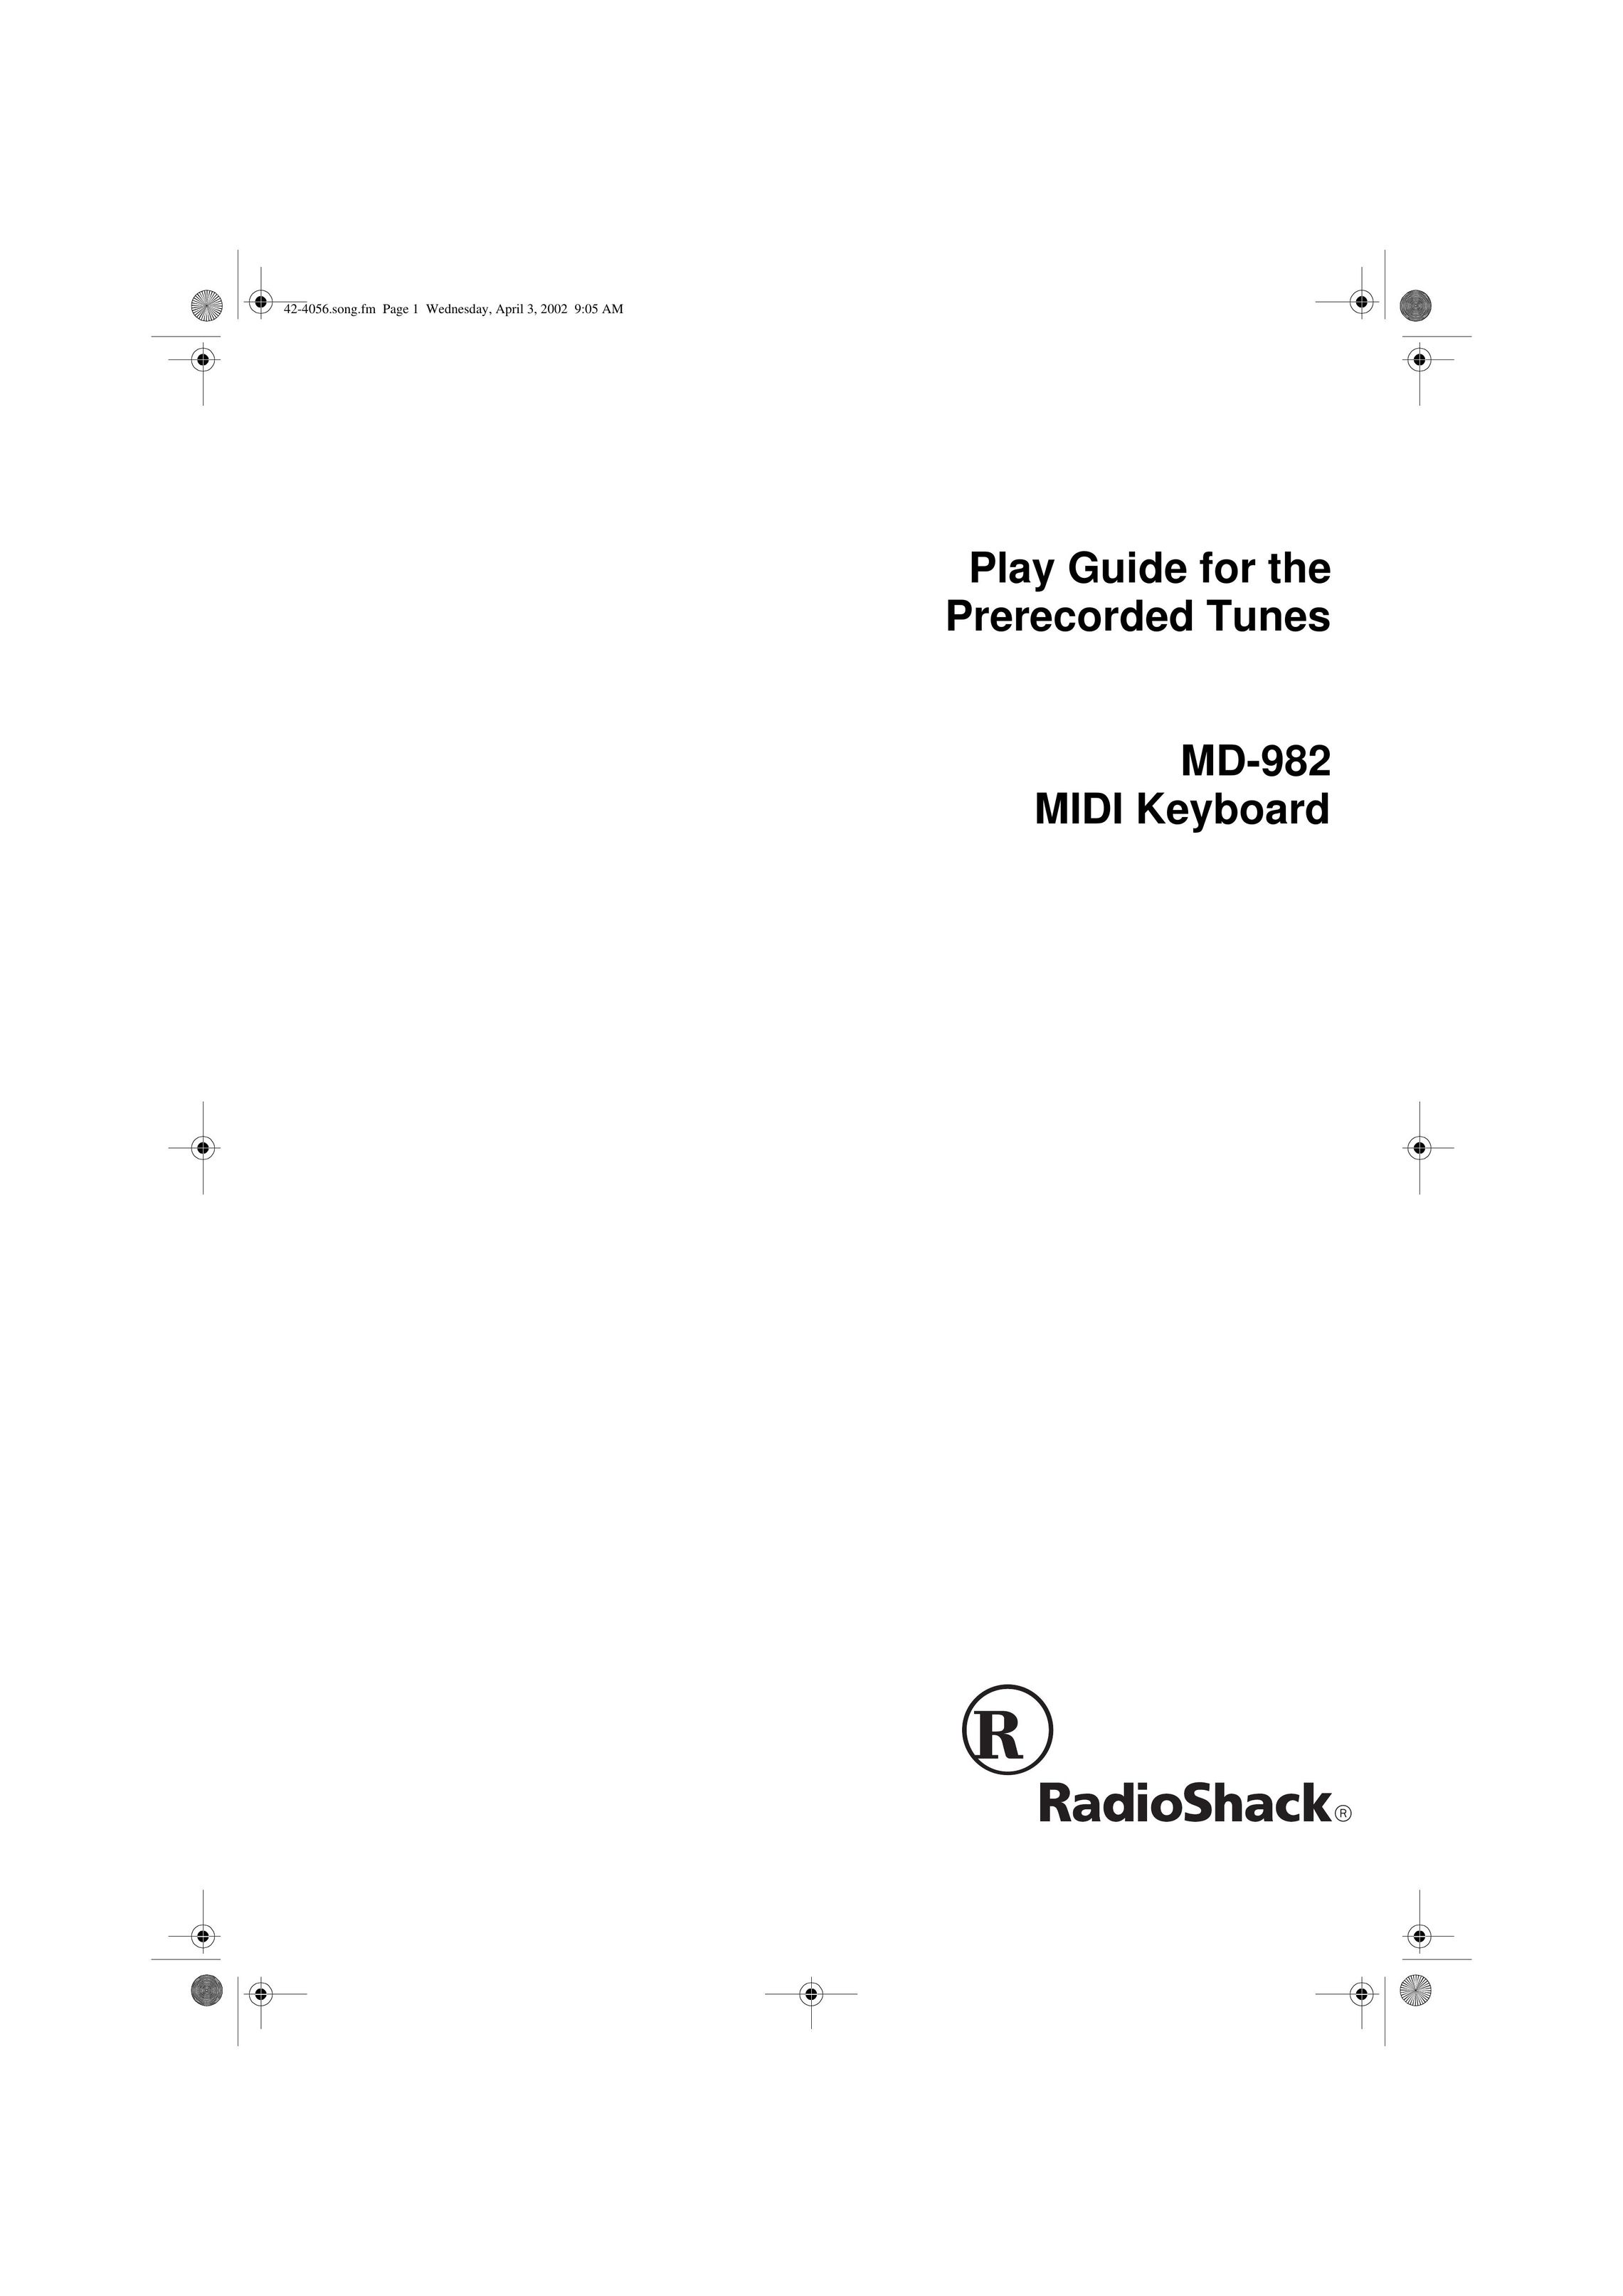 Radio Shack MD-982 Video Game Keyboard User Manual